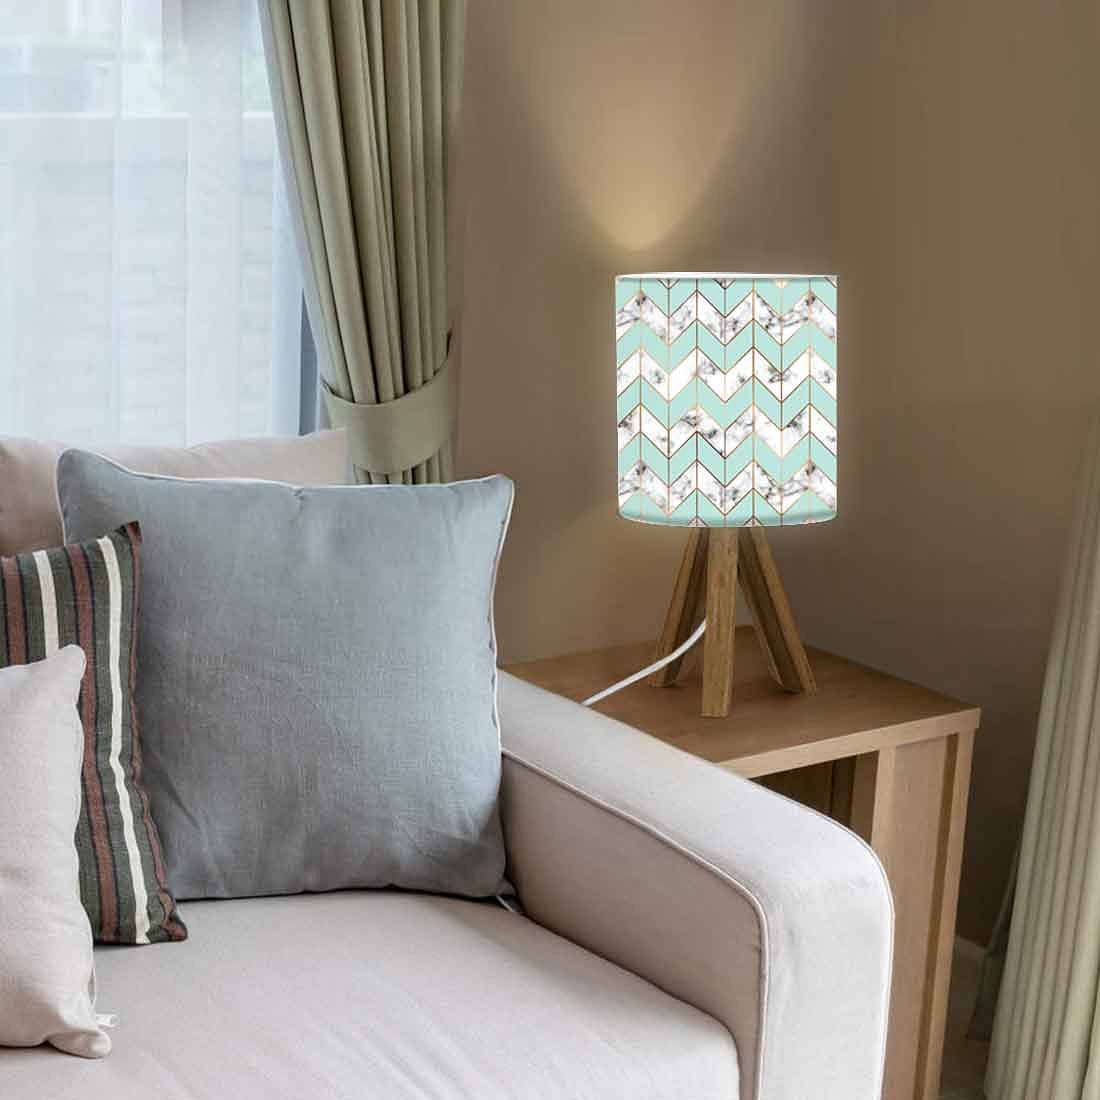 Wooden Bed Lamps For Bedroom - Zig-Zag Lines Green Nutcase